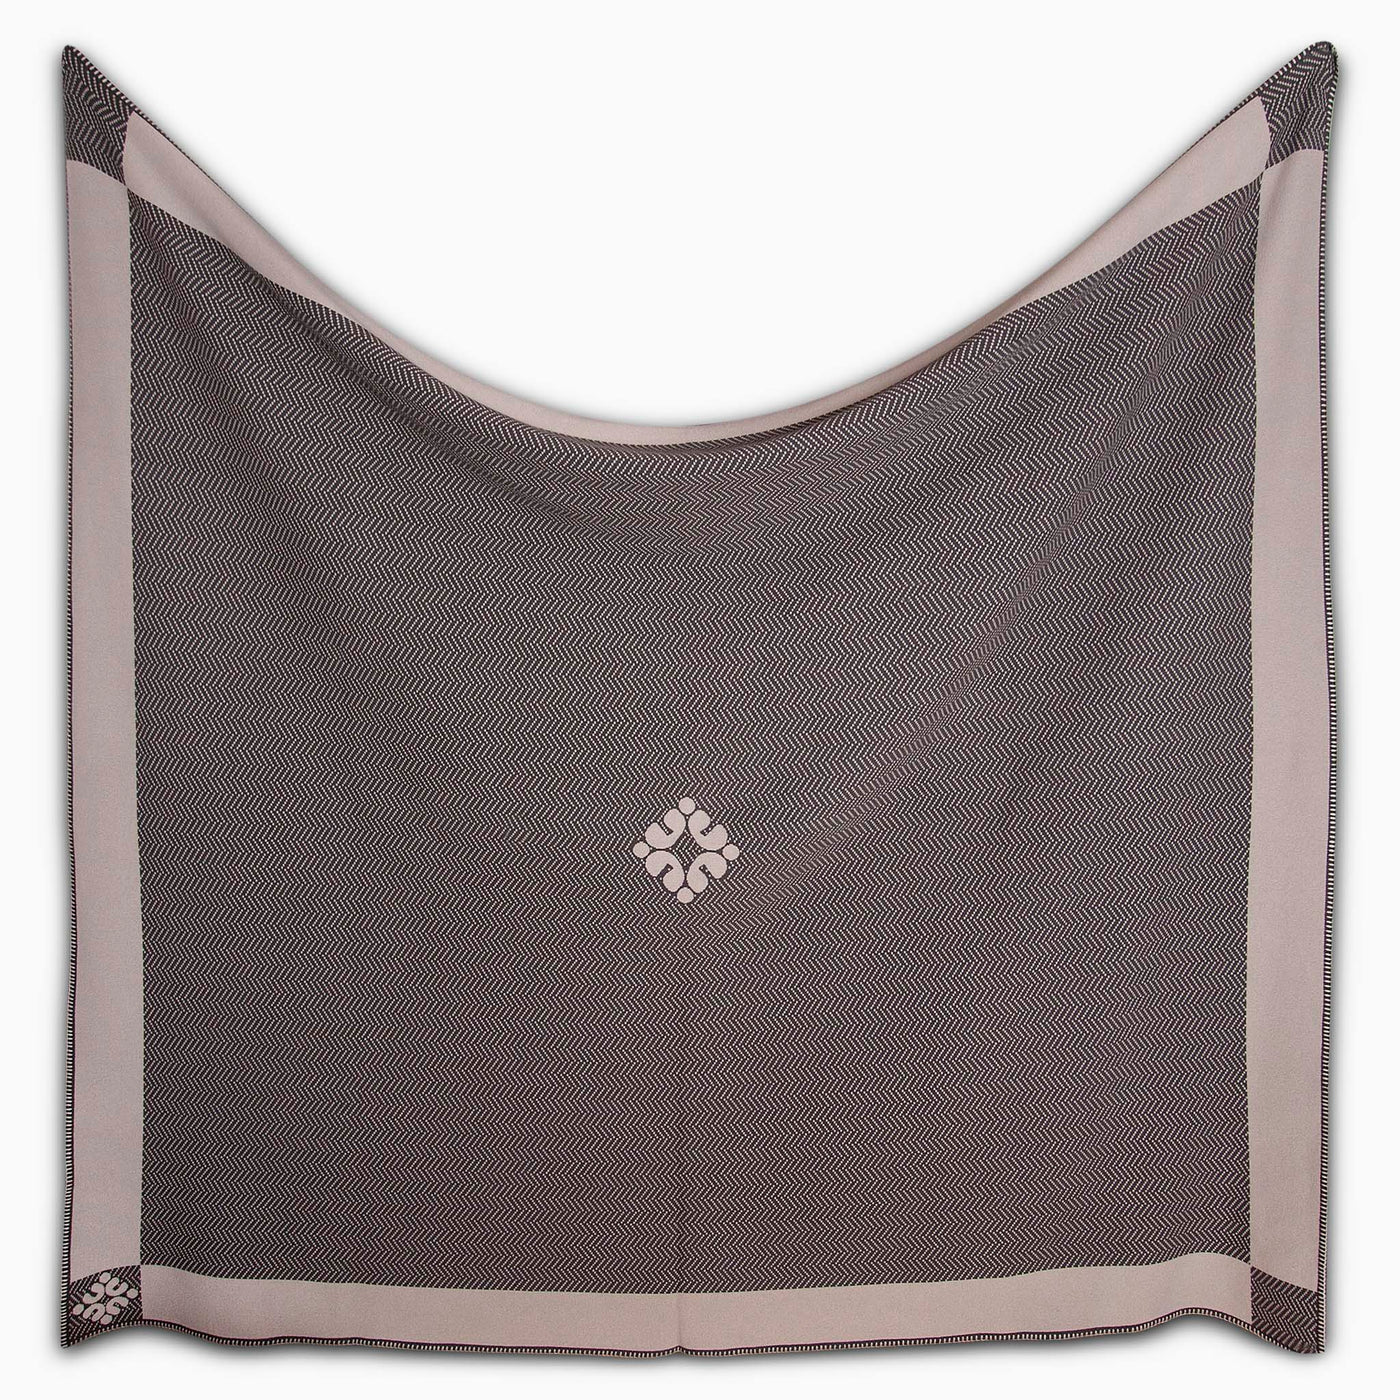 Home K-Blanket Bicolor 100% Cashmere (Fango/Mastice)